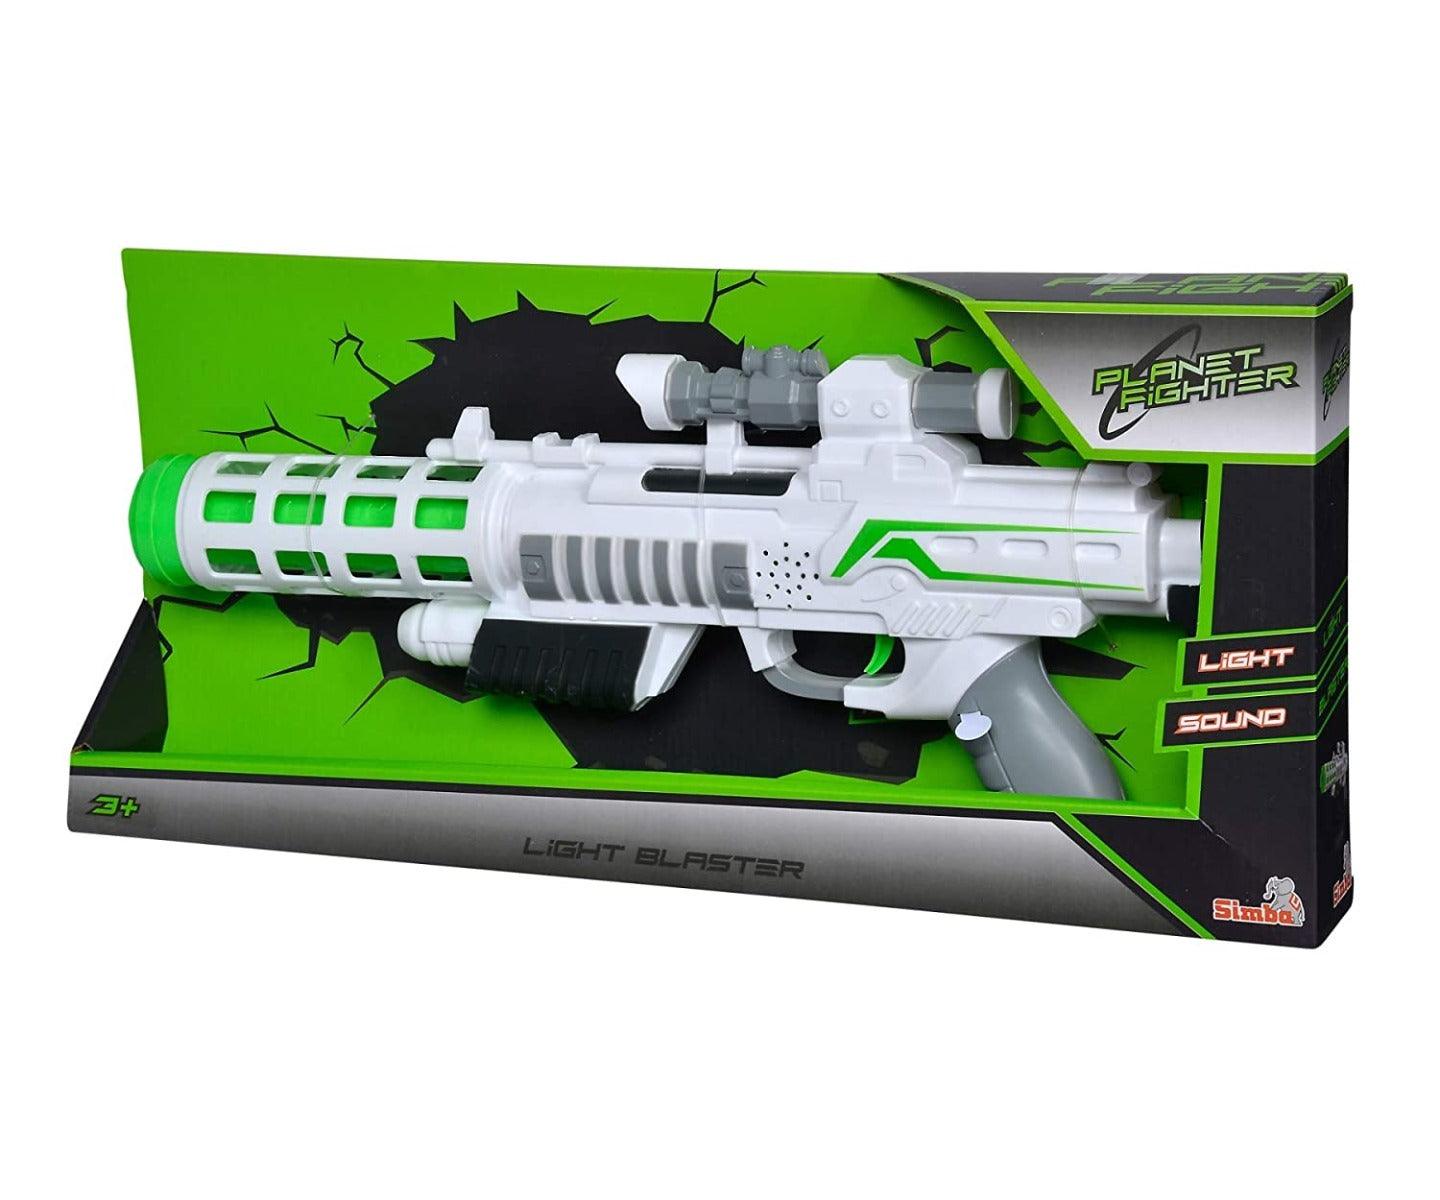 Simba Planet Fighter Light Blaster Rifle